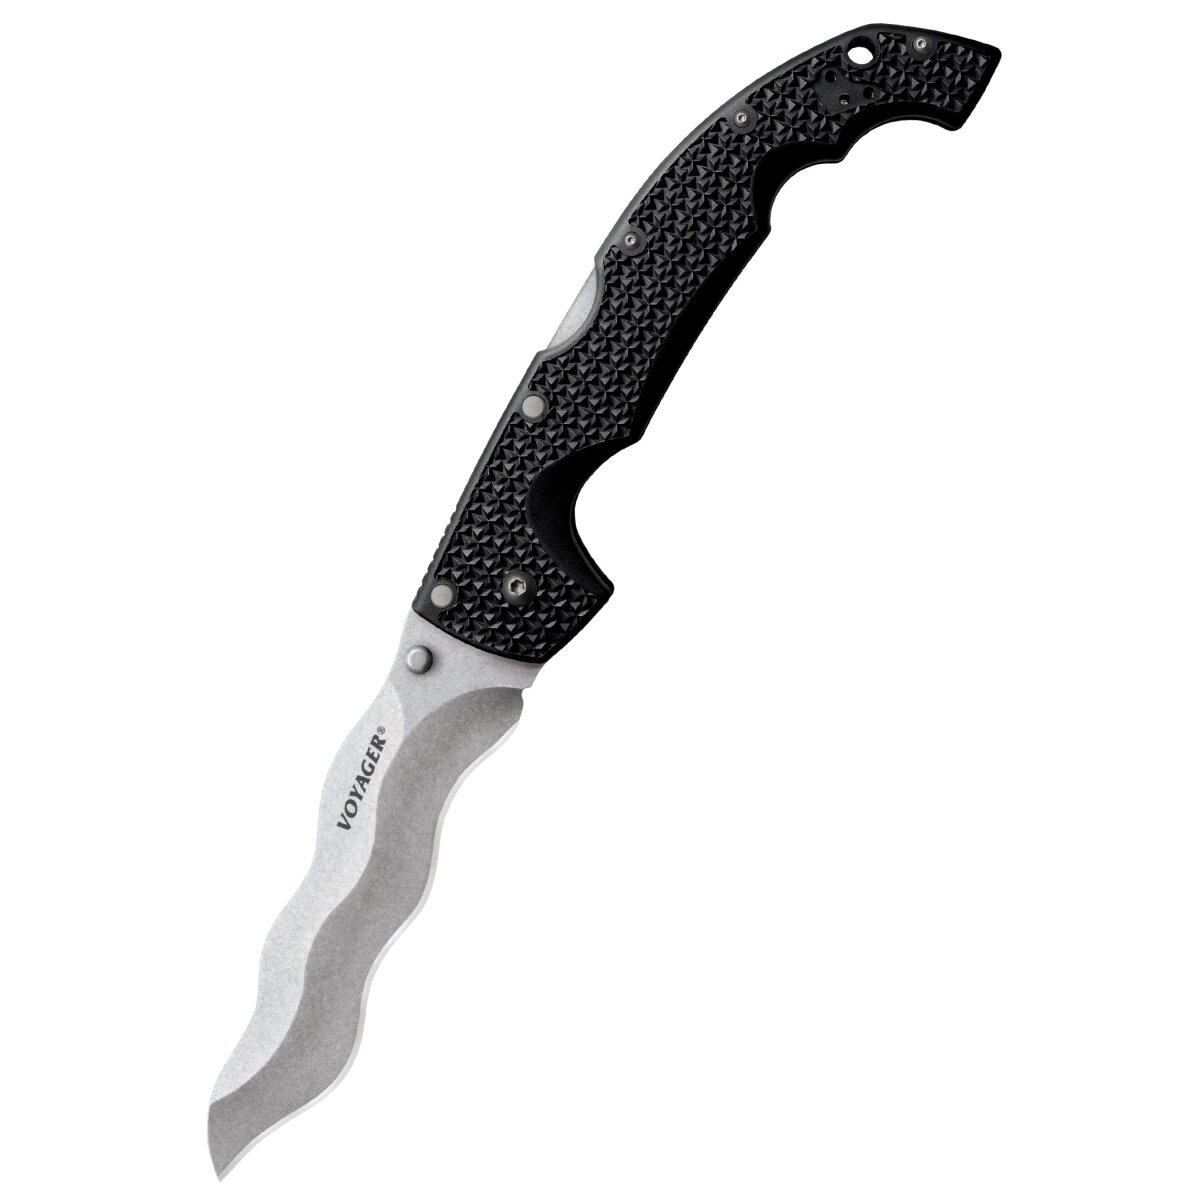 Pocket knife Kris Voyager, AUS 10A